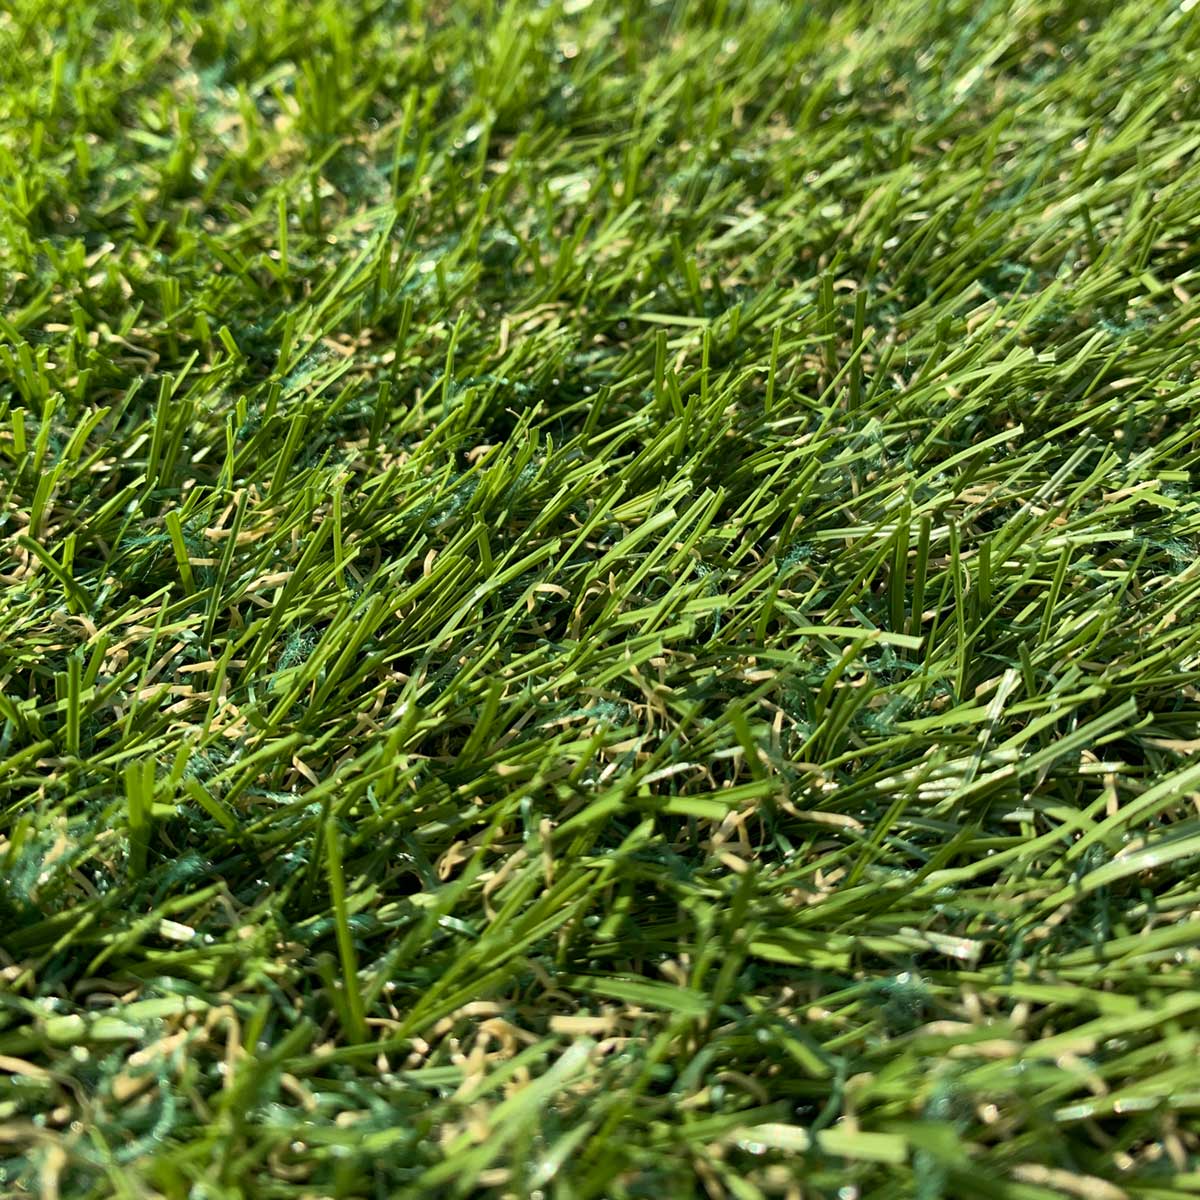 Thistle Artificial Grass Range: Fyvie 2019 (28mm)